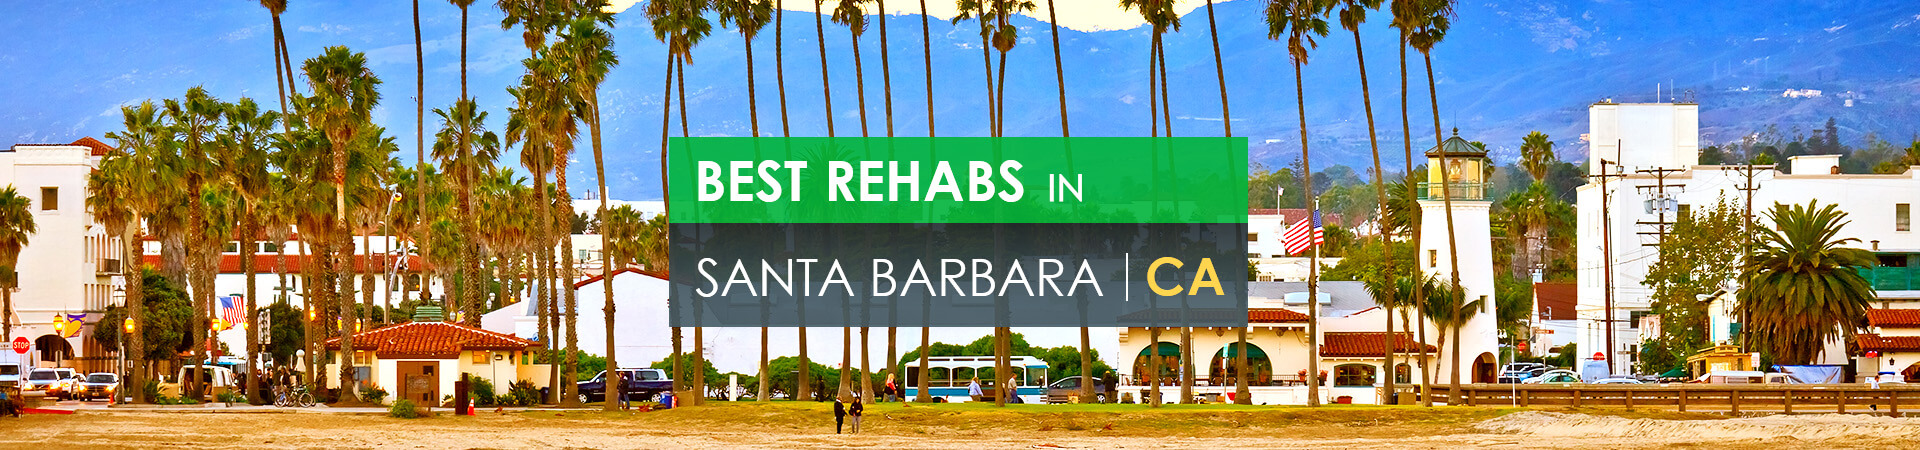 Best rehabs in Santa Barbara, CA